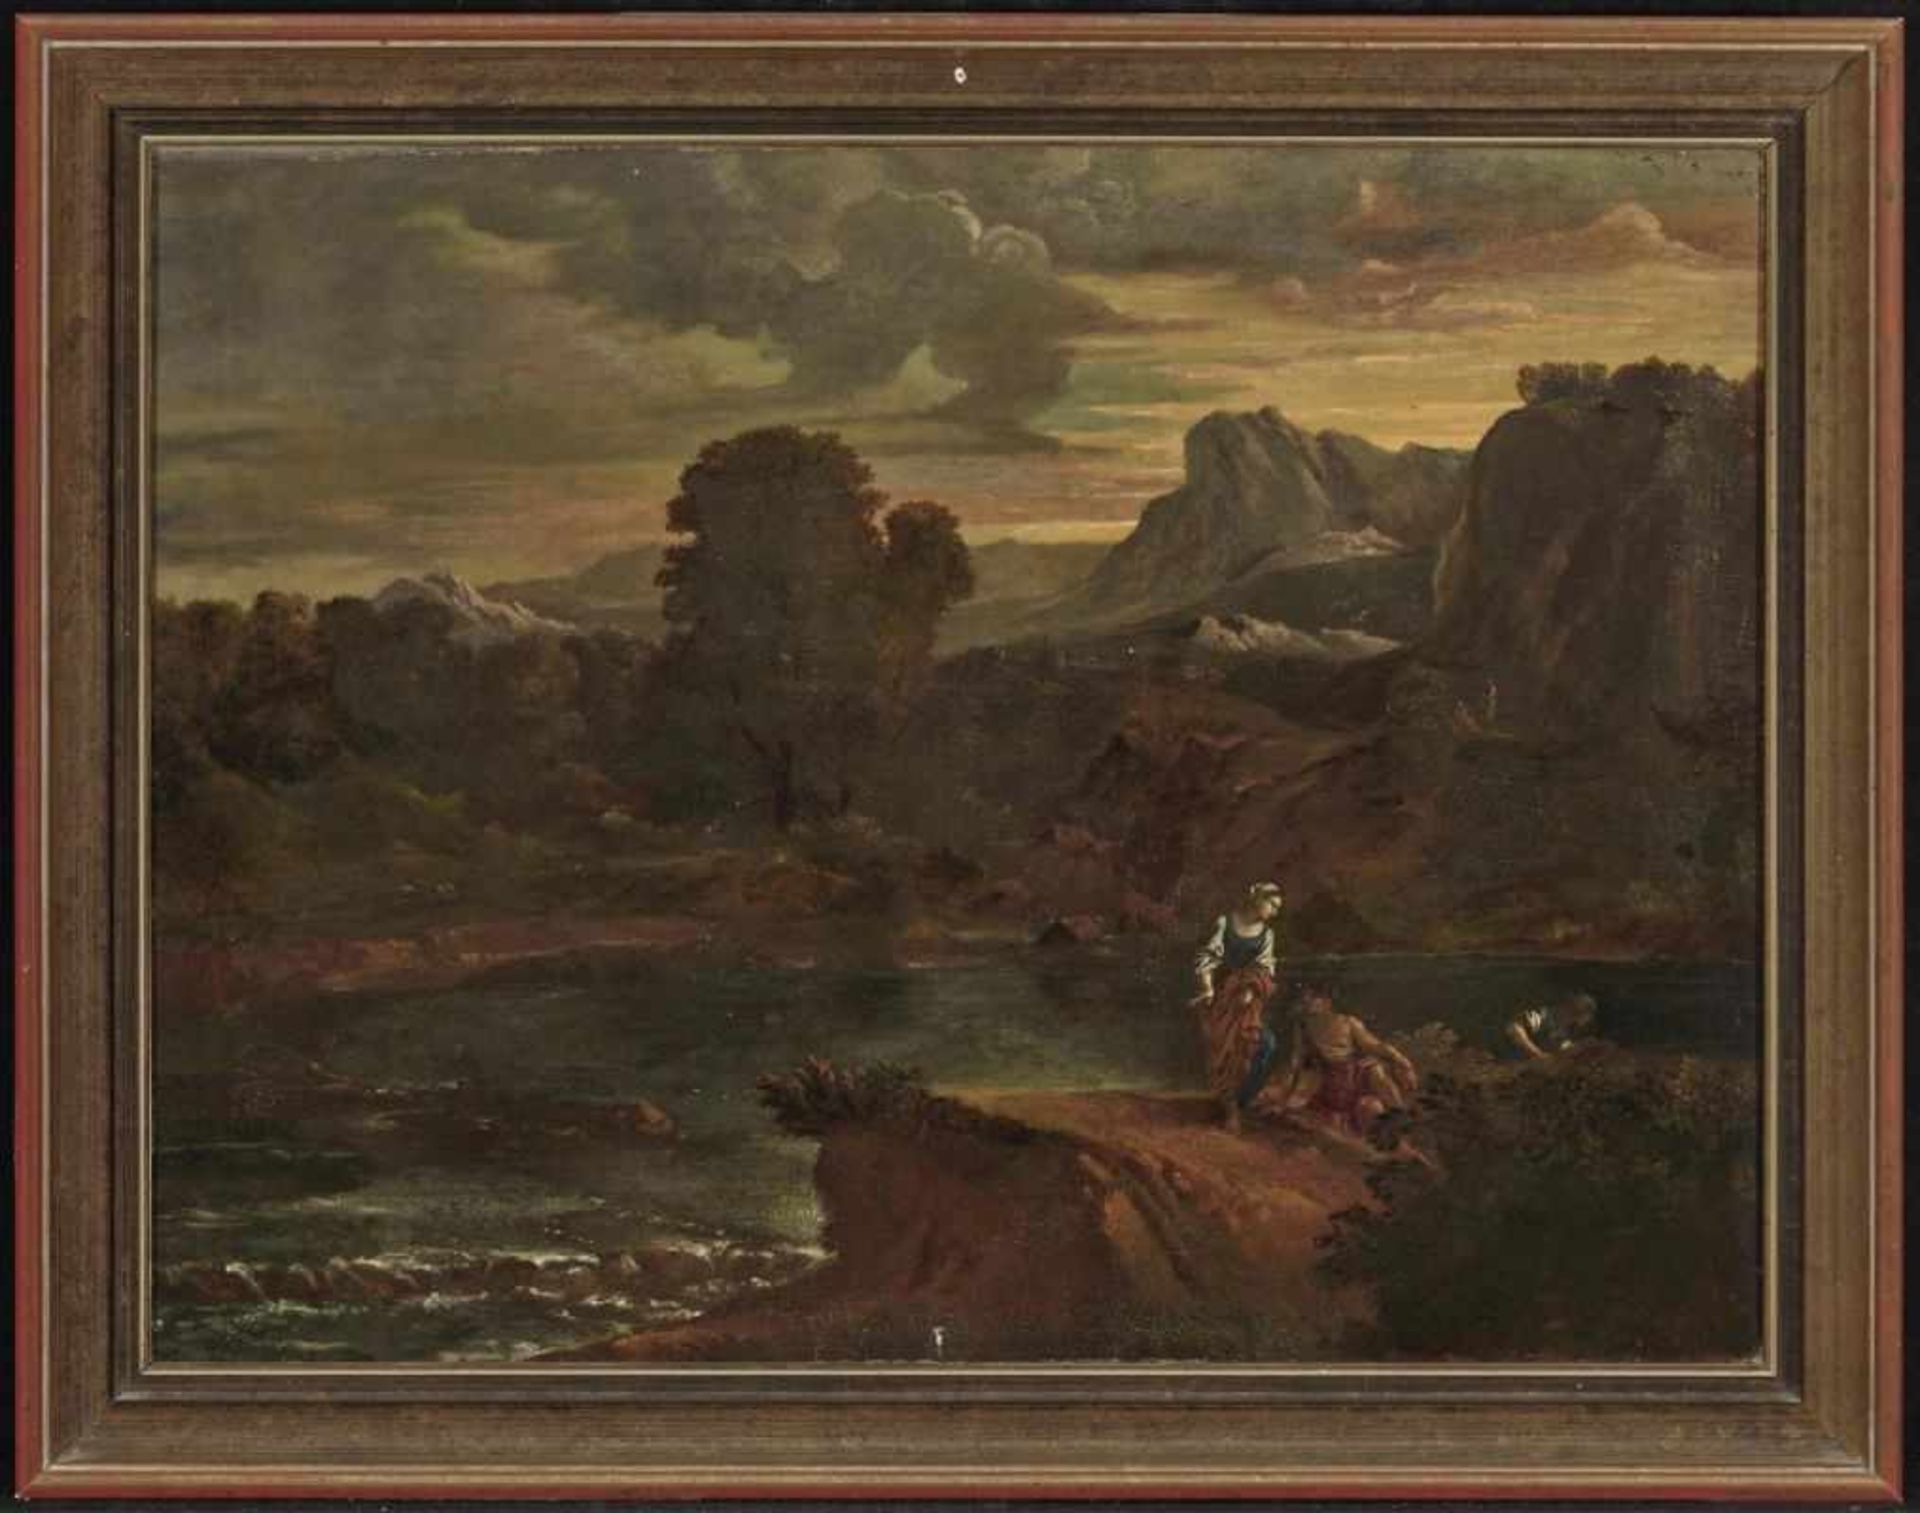 Italian School (?) 18th centuryRiver Landscape with Figure Scenery Oil on canvas. 57 x 74.5 cm. - Bild 2 aus 2